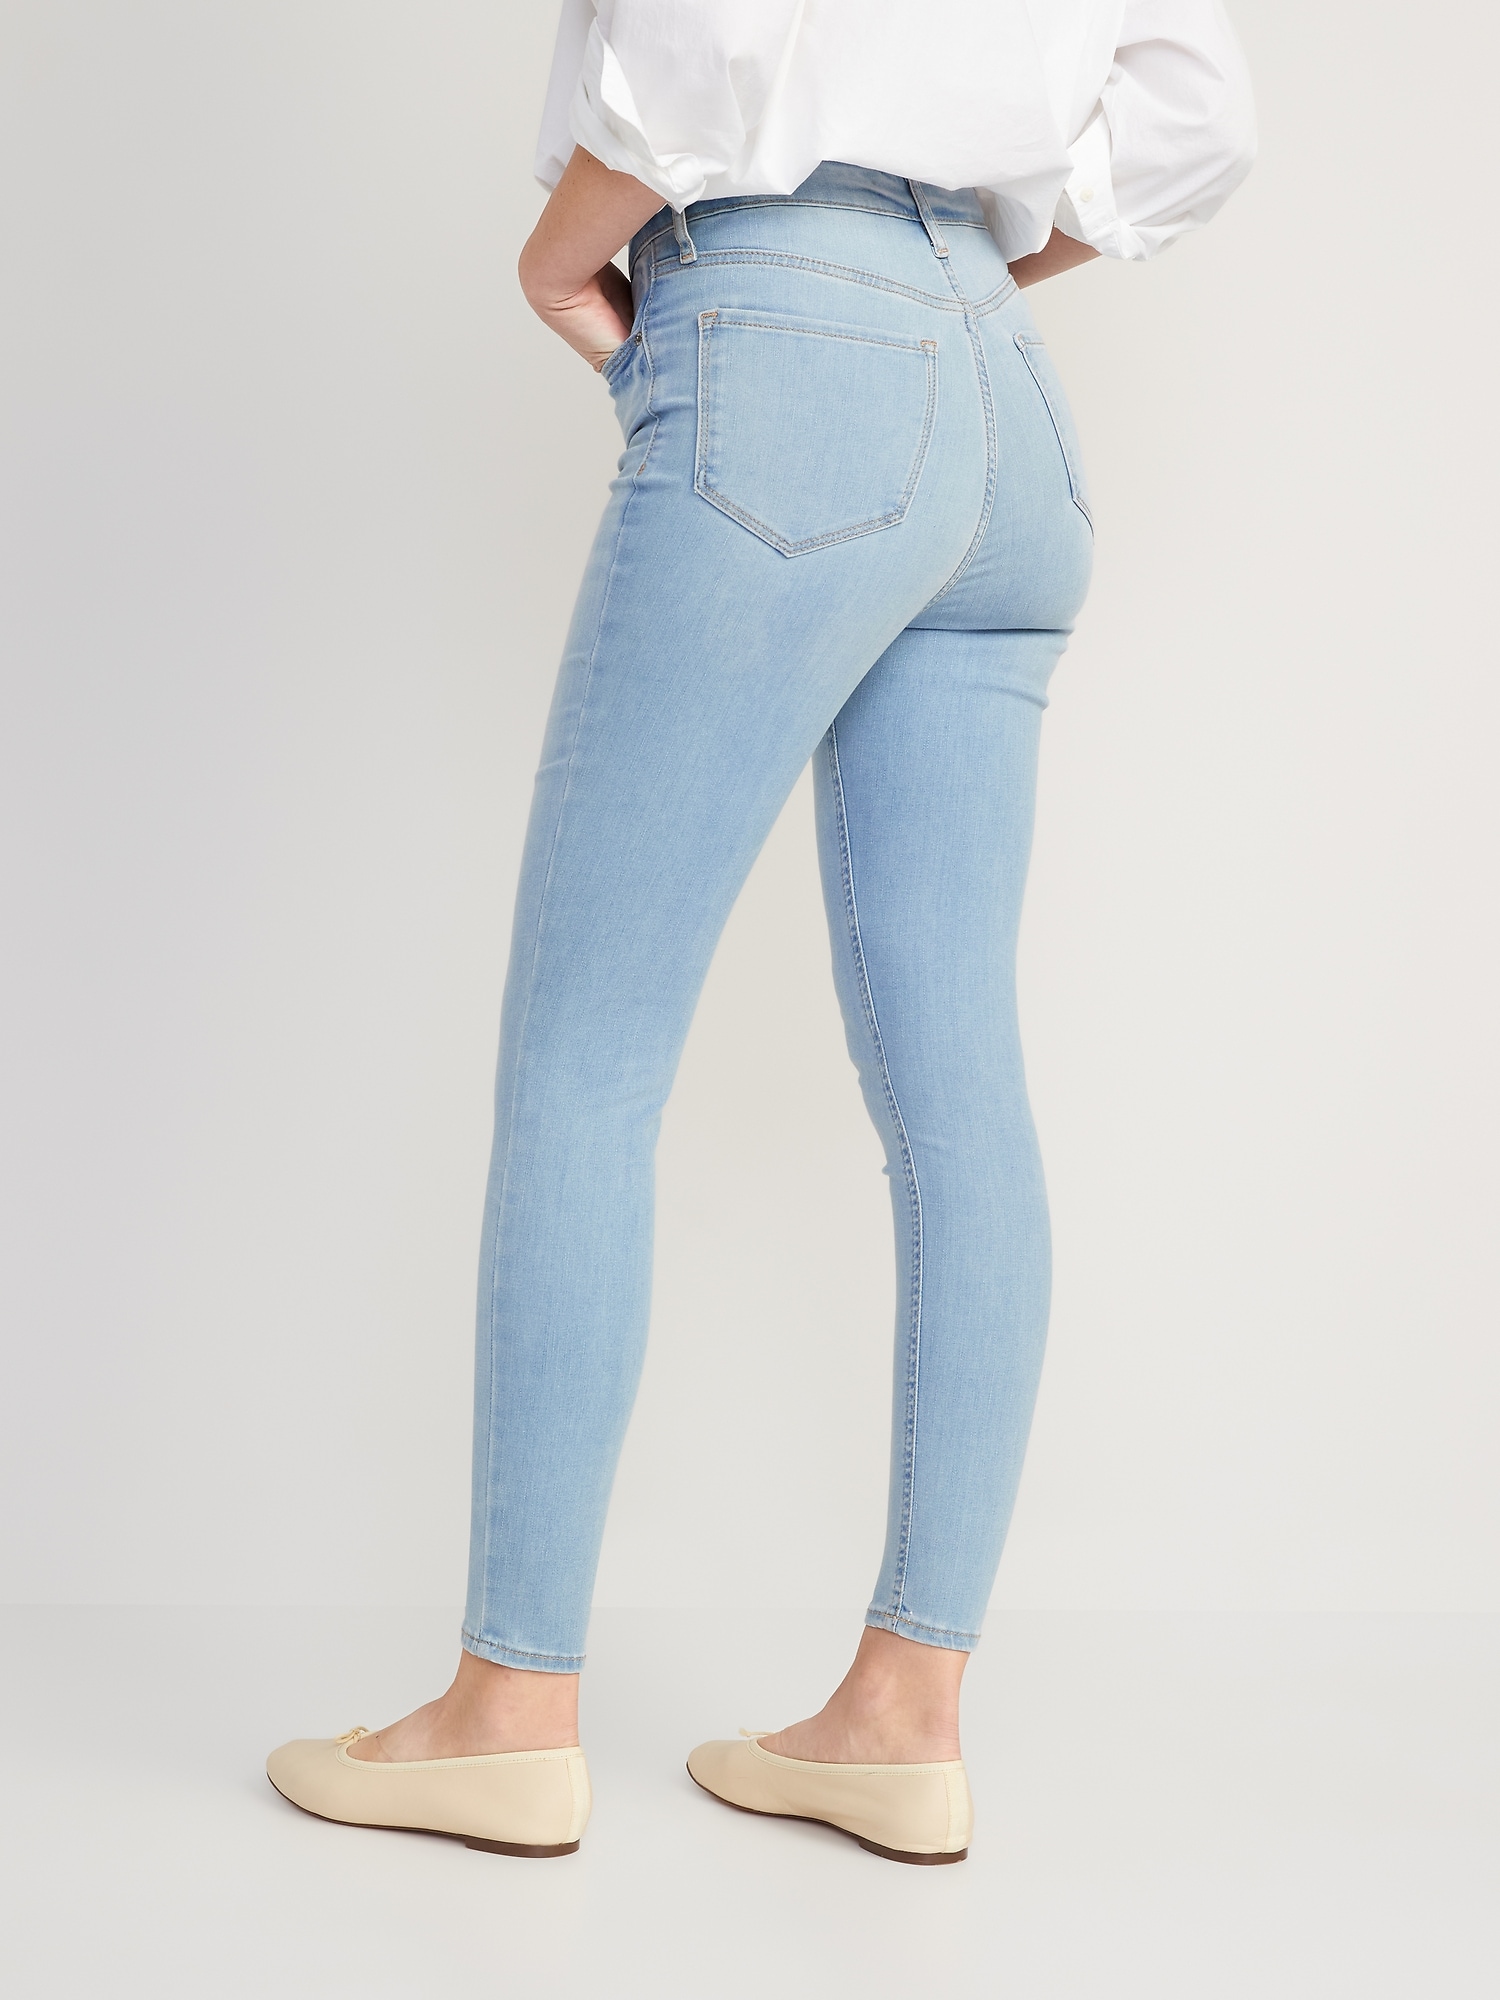 FitsYou 3-Sizes-in-1 Rockstar Super-Skinny Jeans